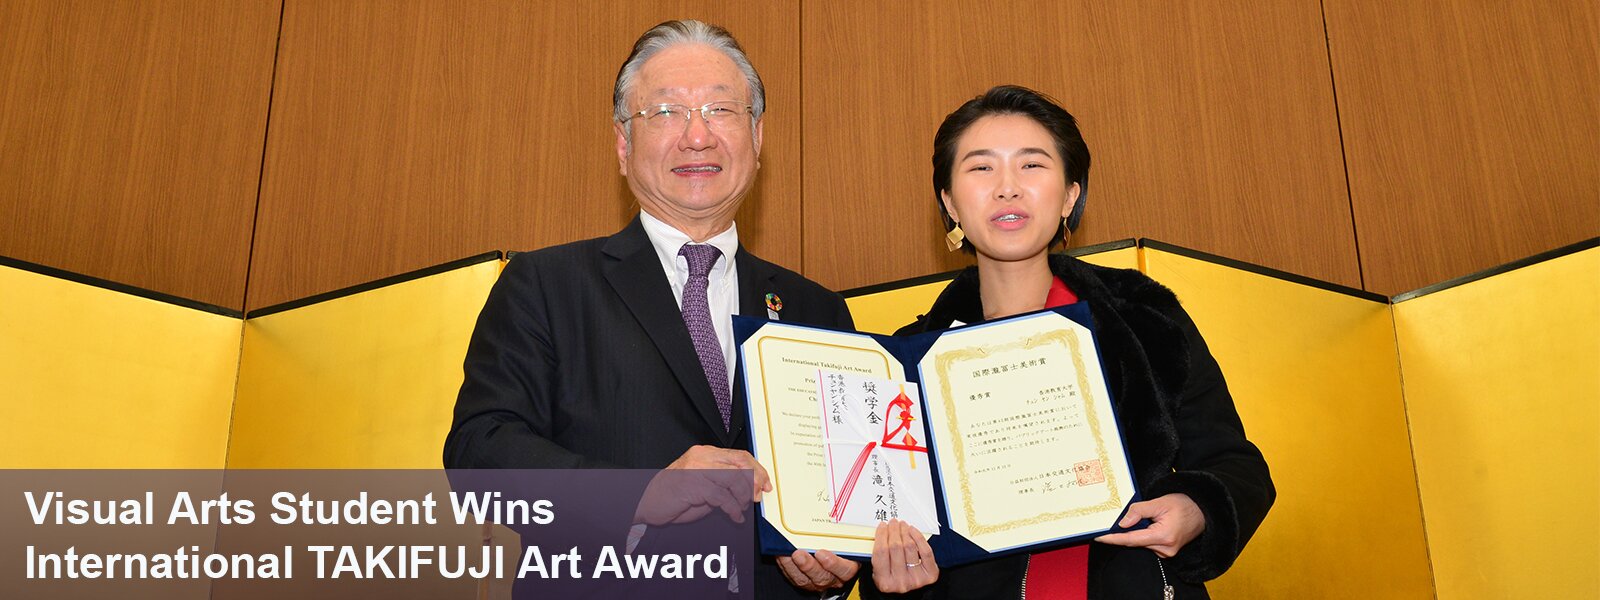 Visual Arts Student Wins International TAKIFUJI Art Award